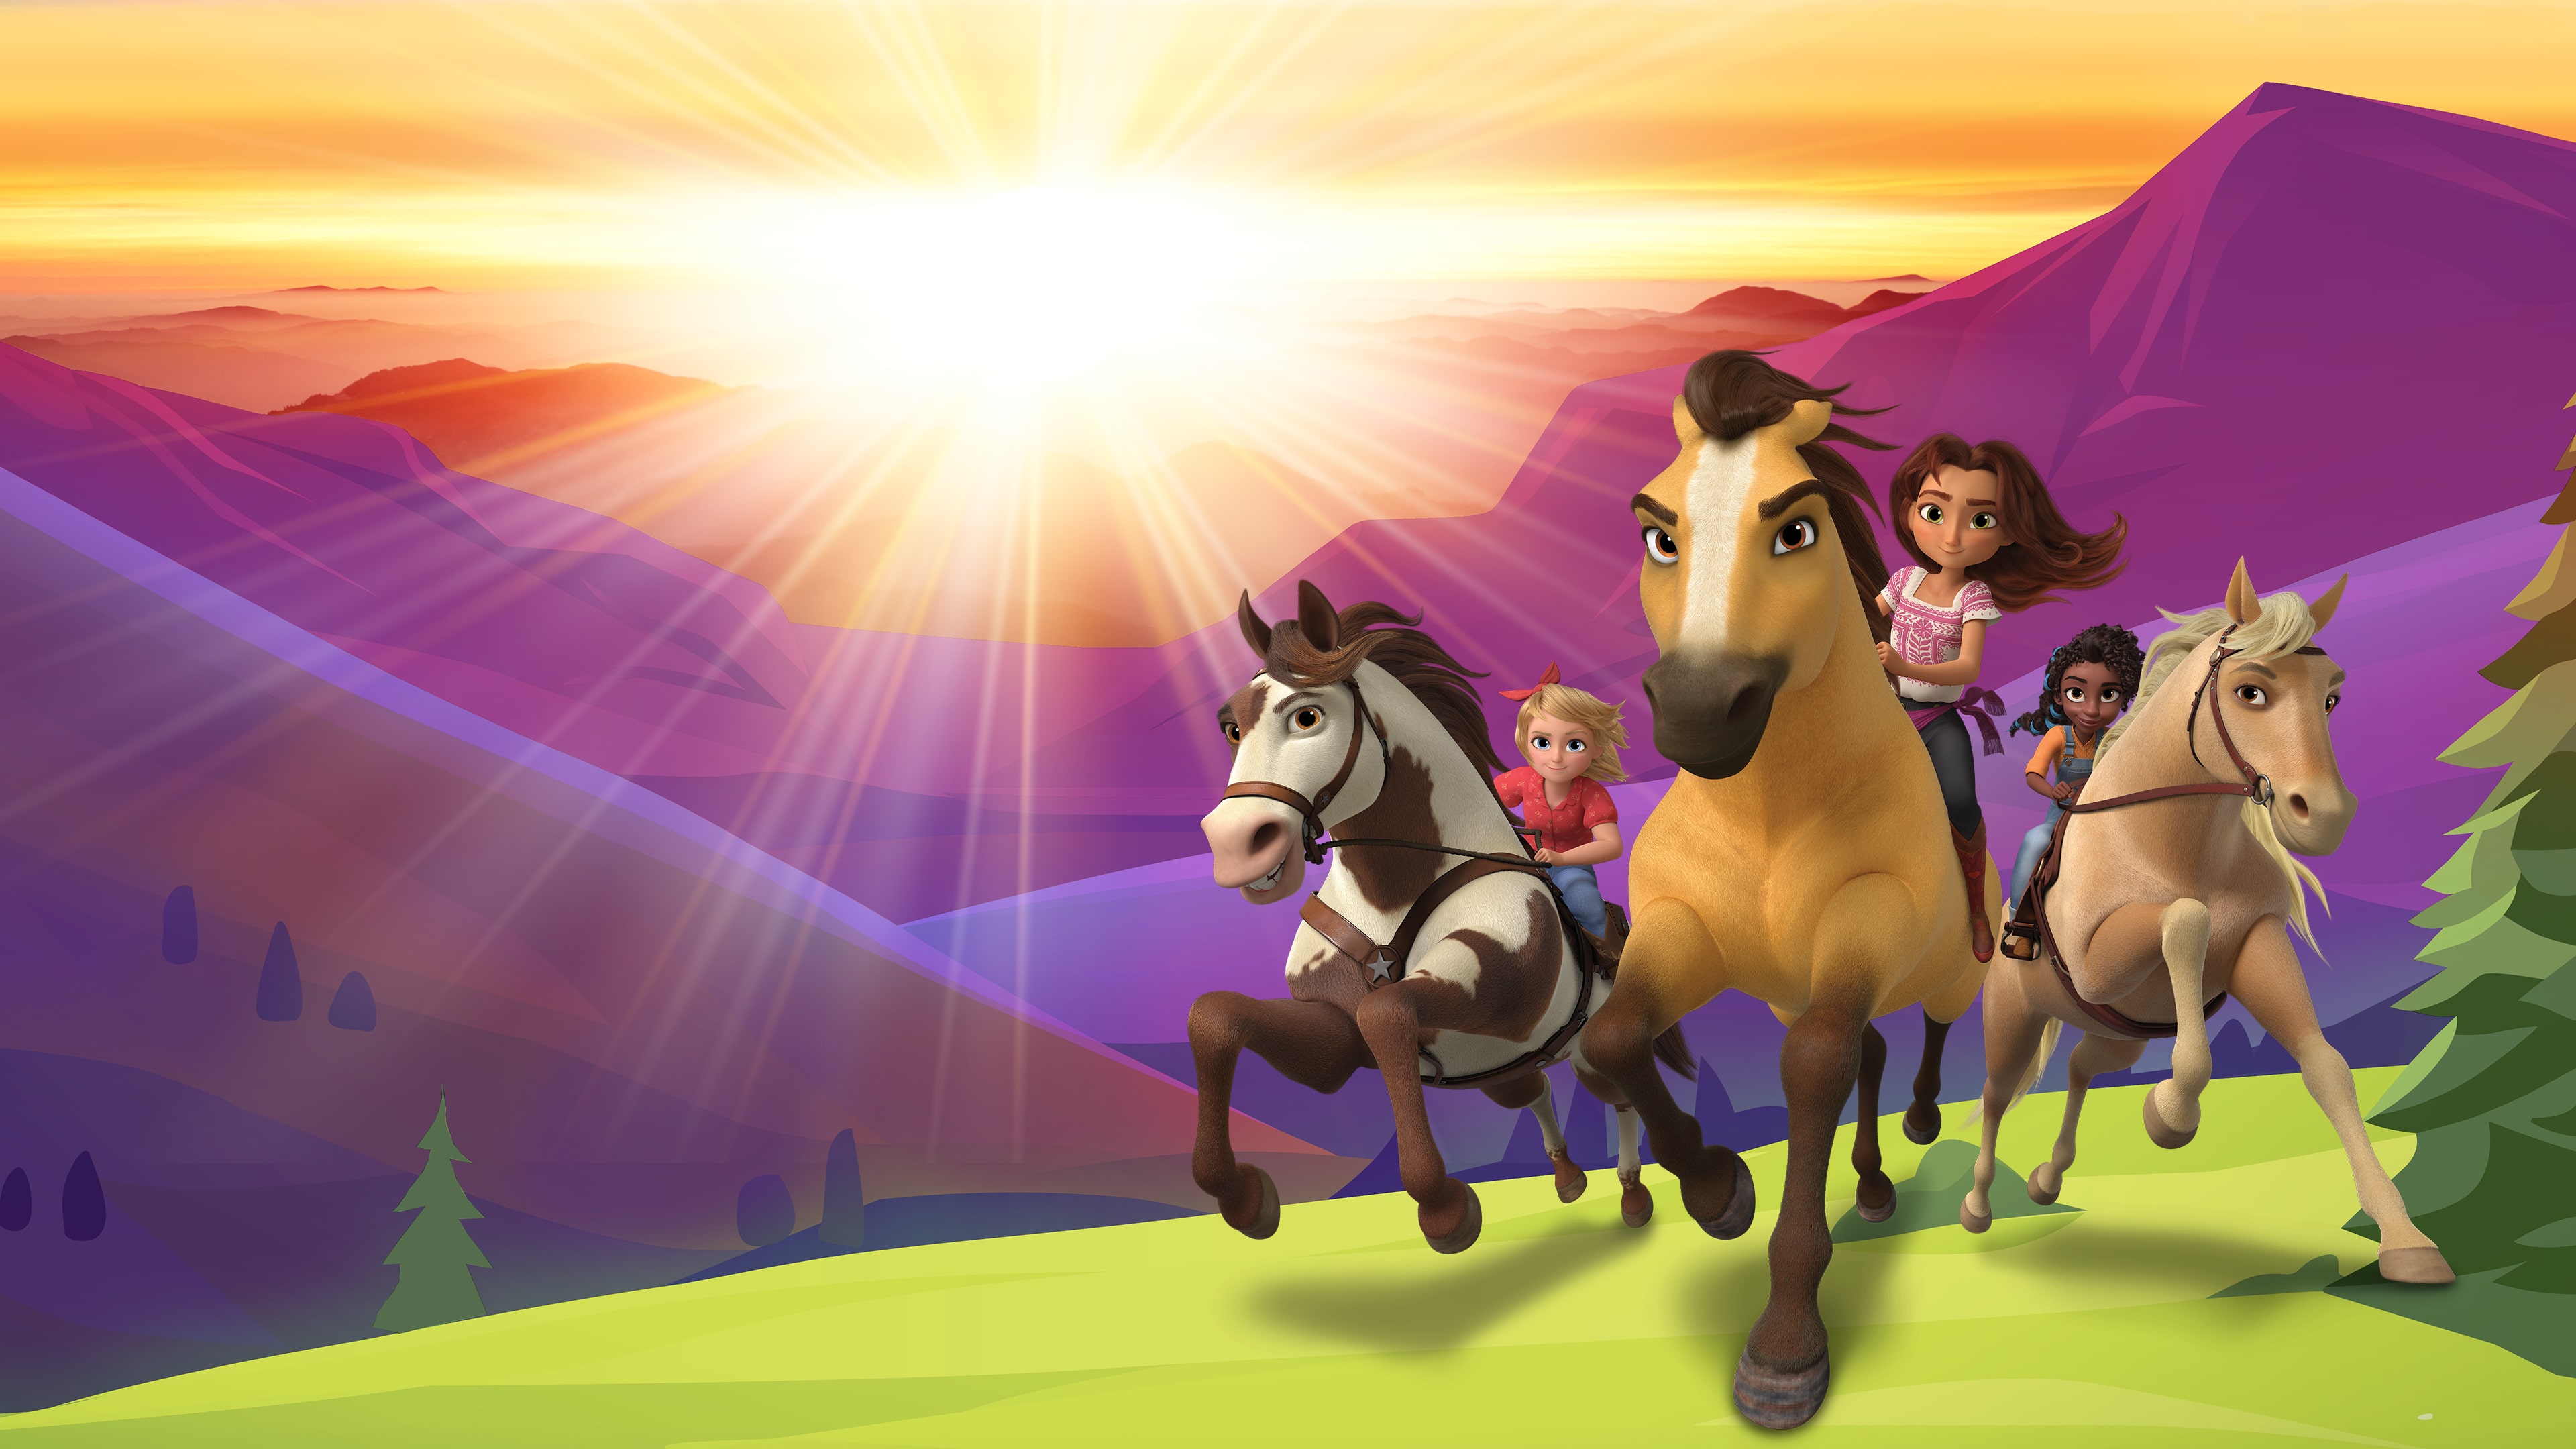 DreamWorks Spirit La grande aventure de Lucky